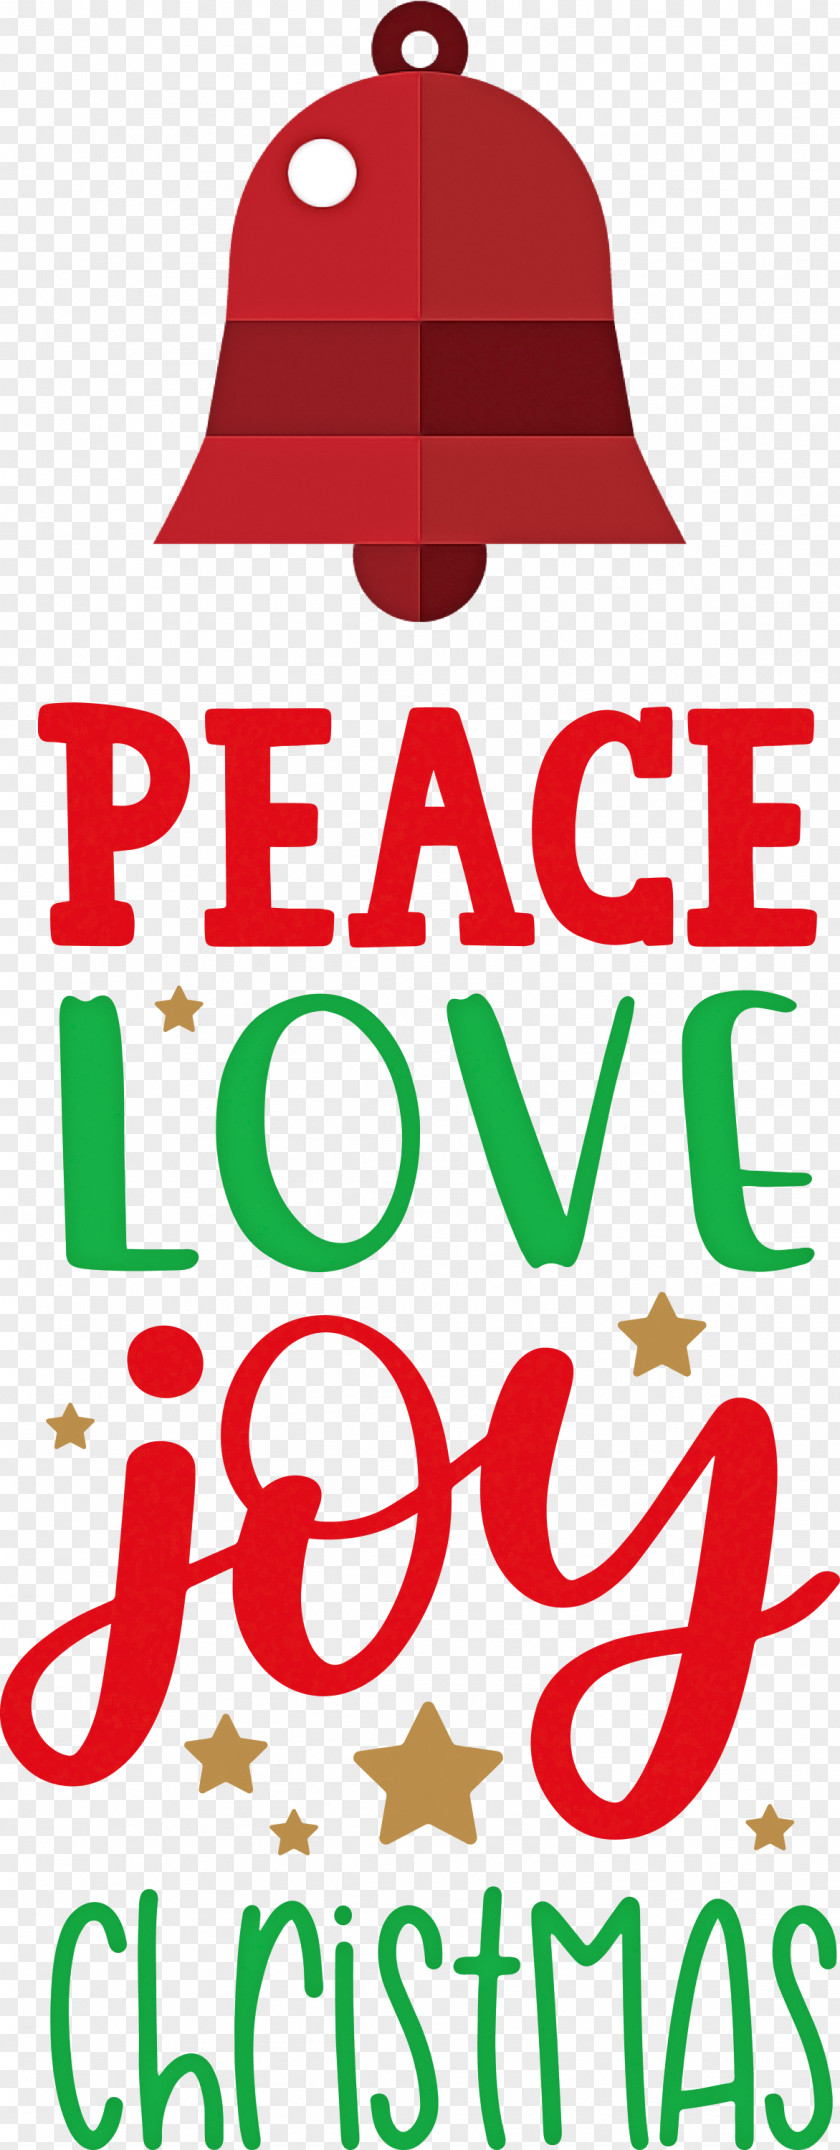 Peace Love Joy PNG